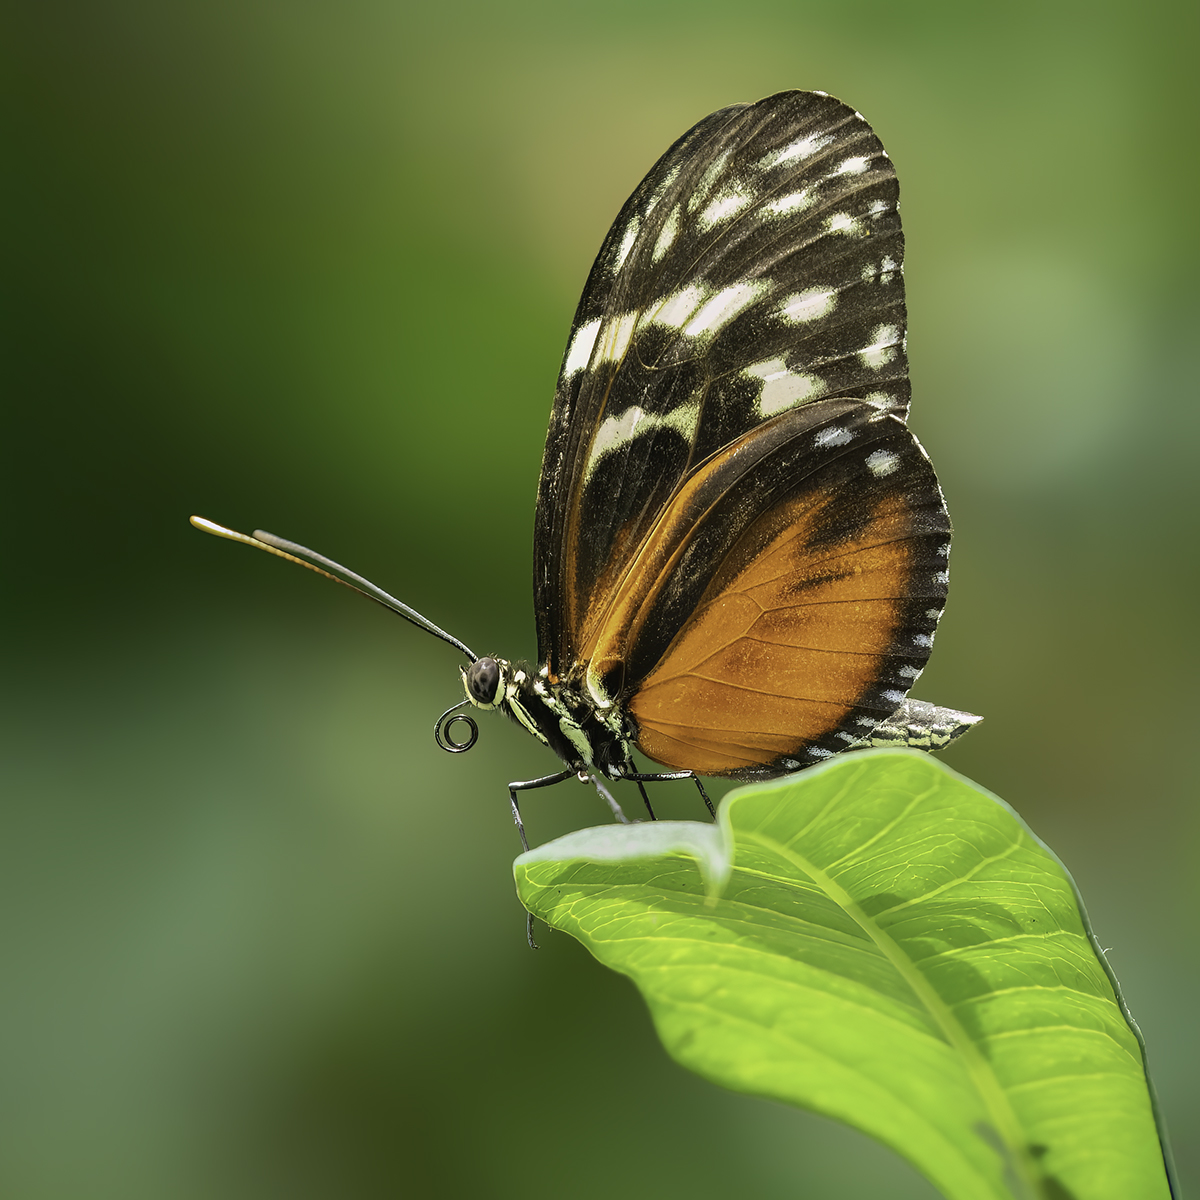 Butterfly conservatory by Jim Overfield